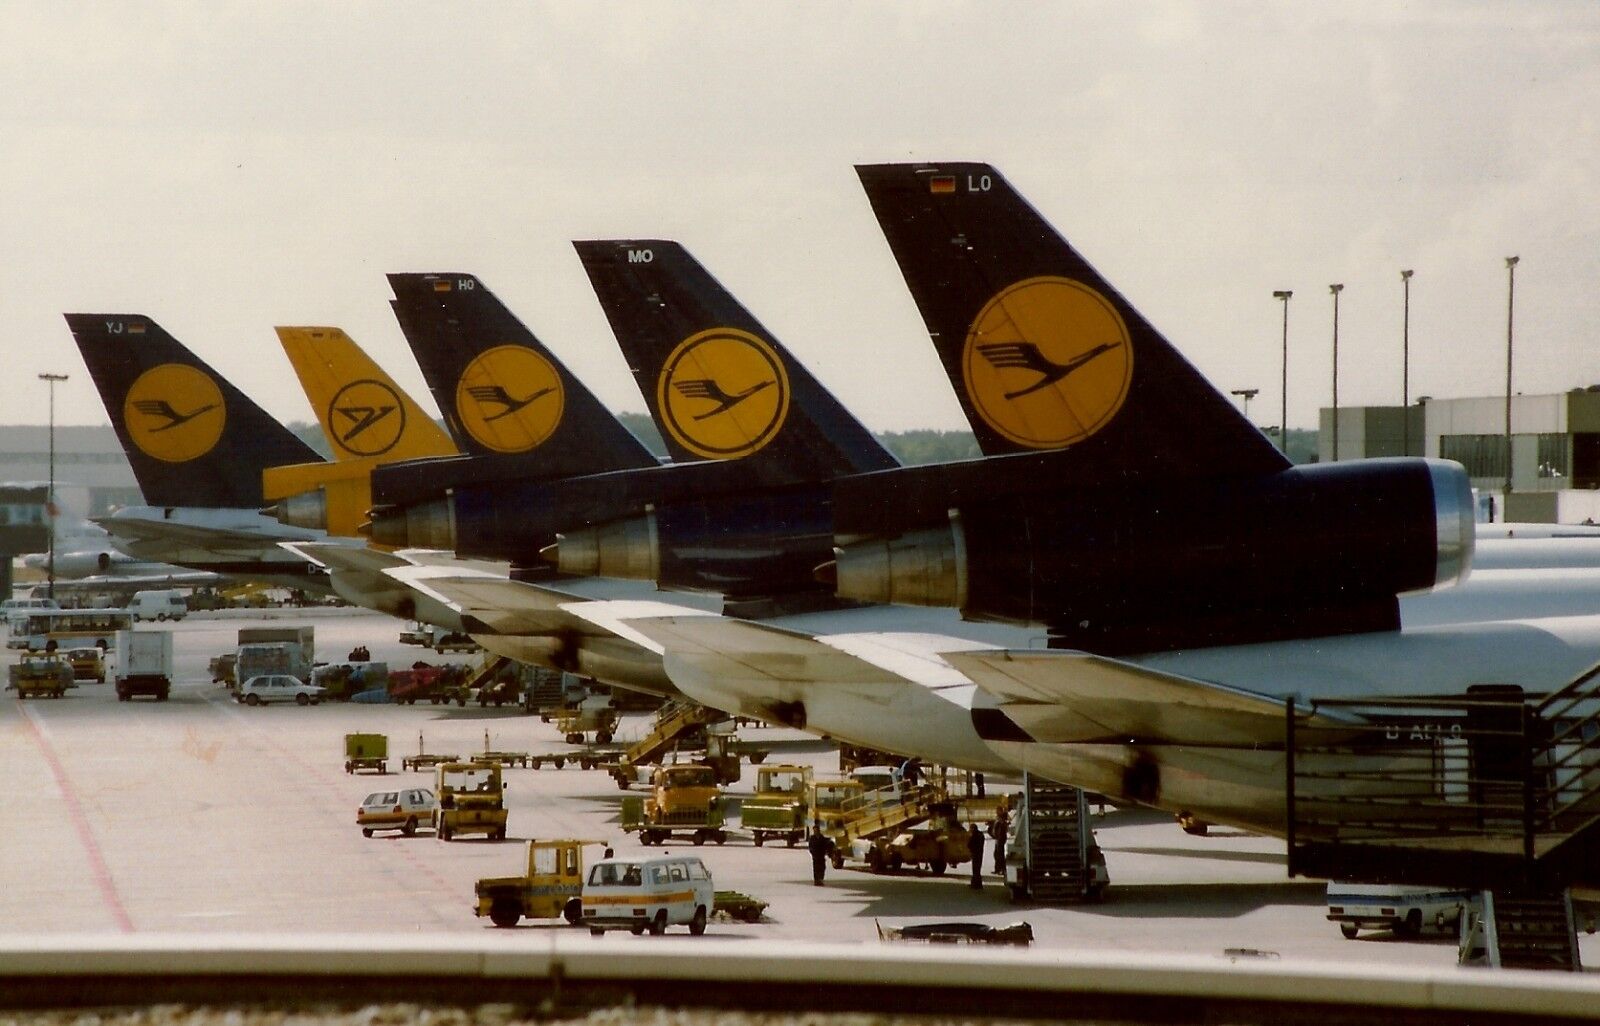 Lufthansa DC-10 Aircraft at Frankfurt Airport 1989